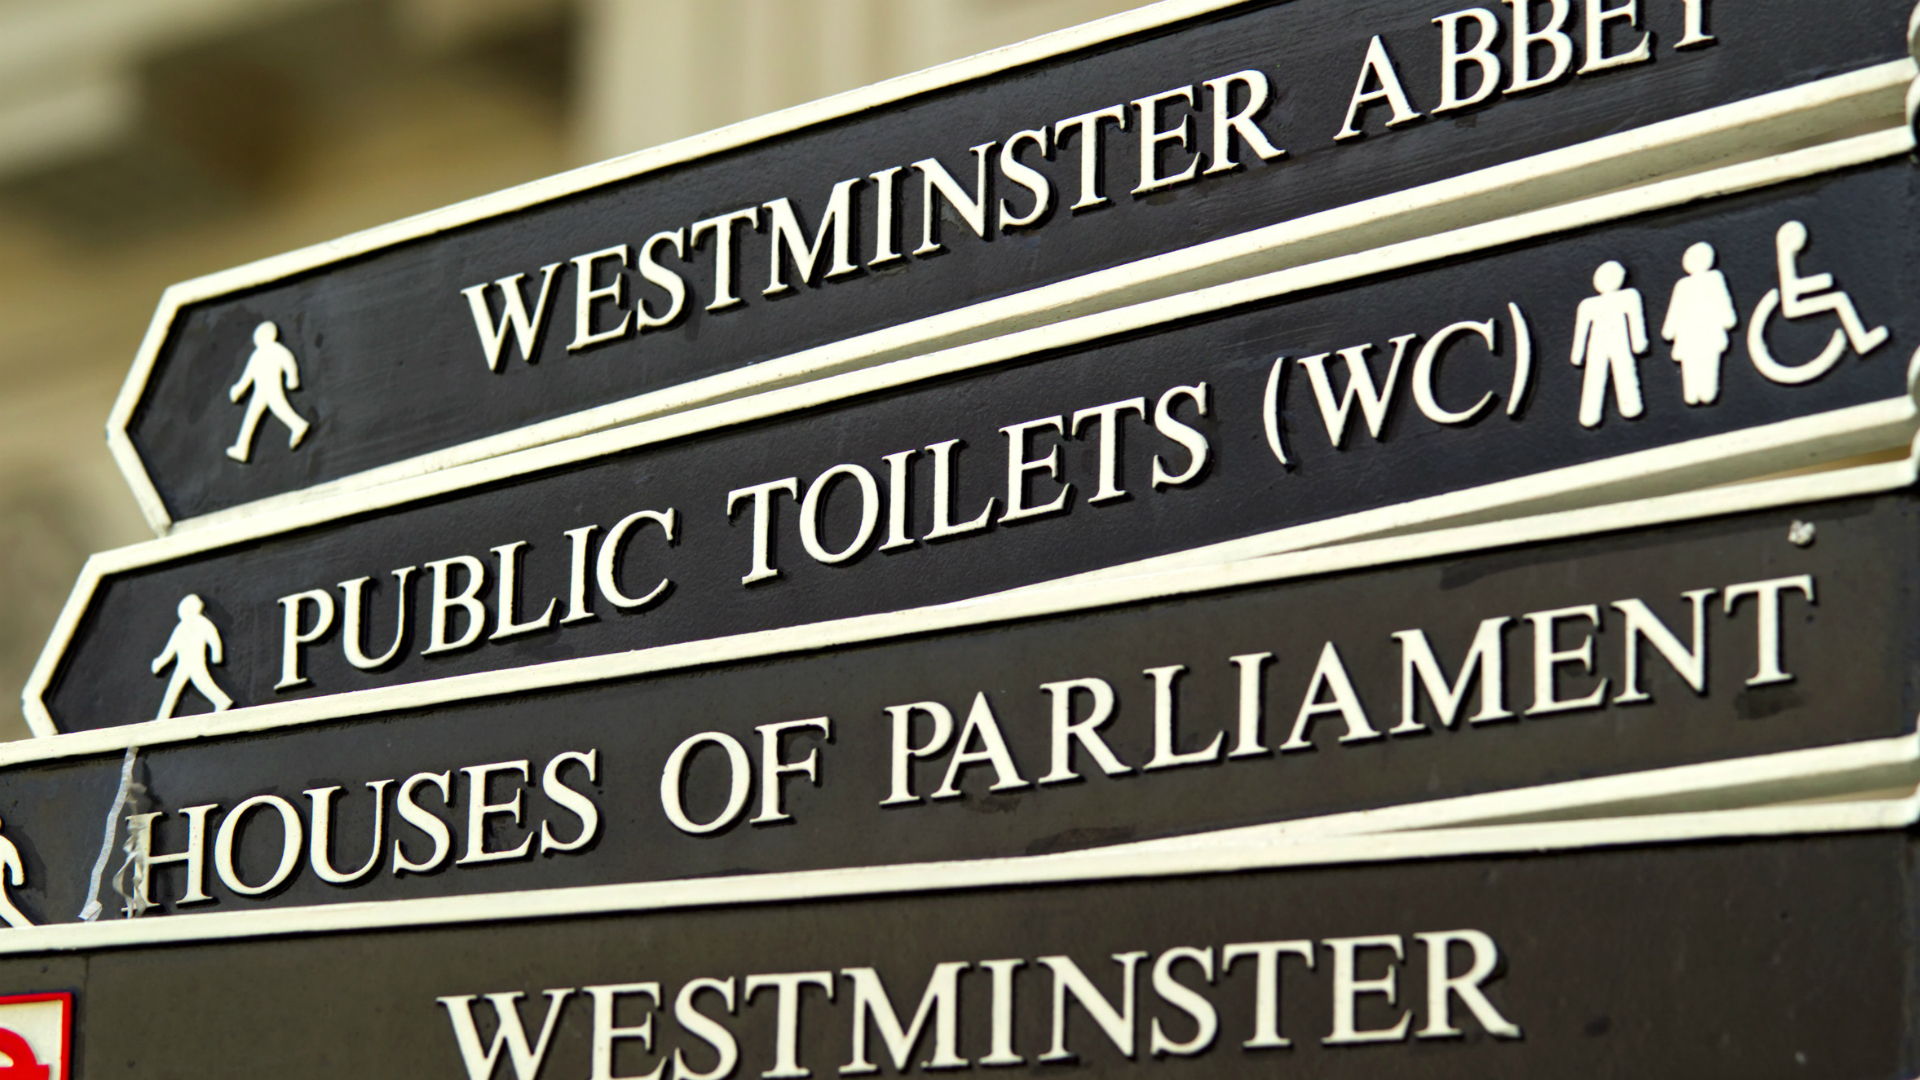 London toilets